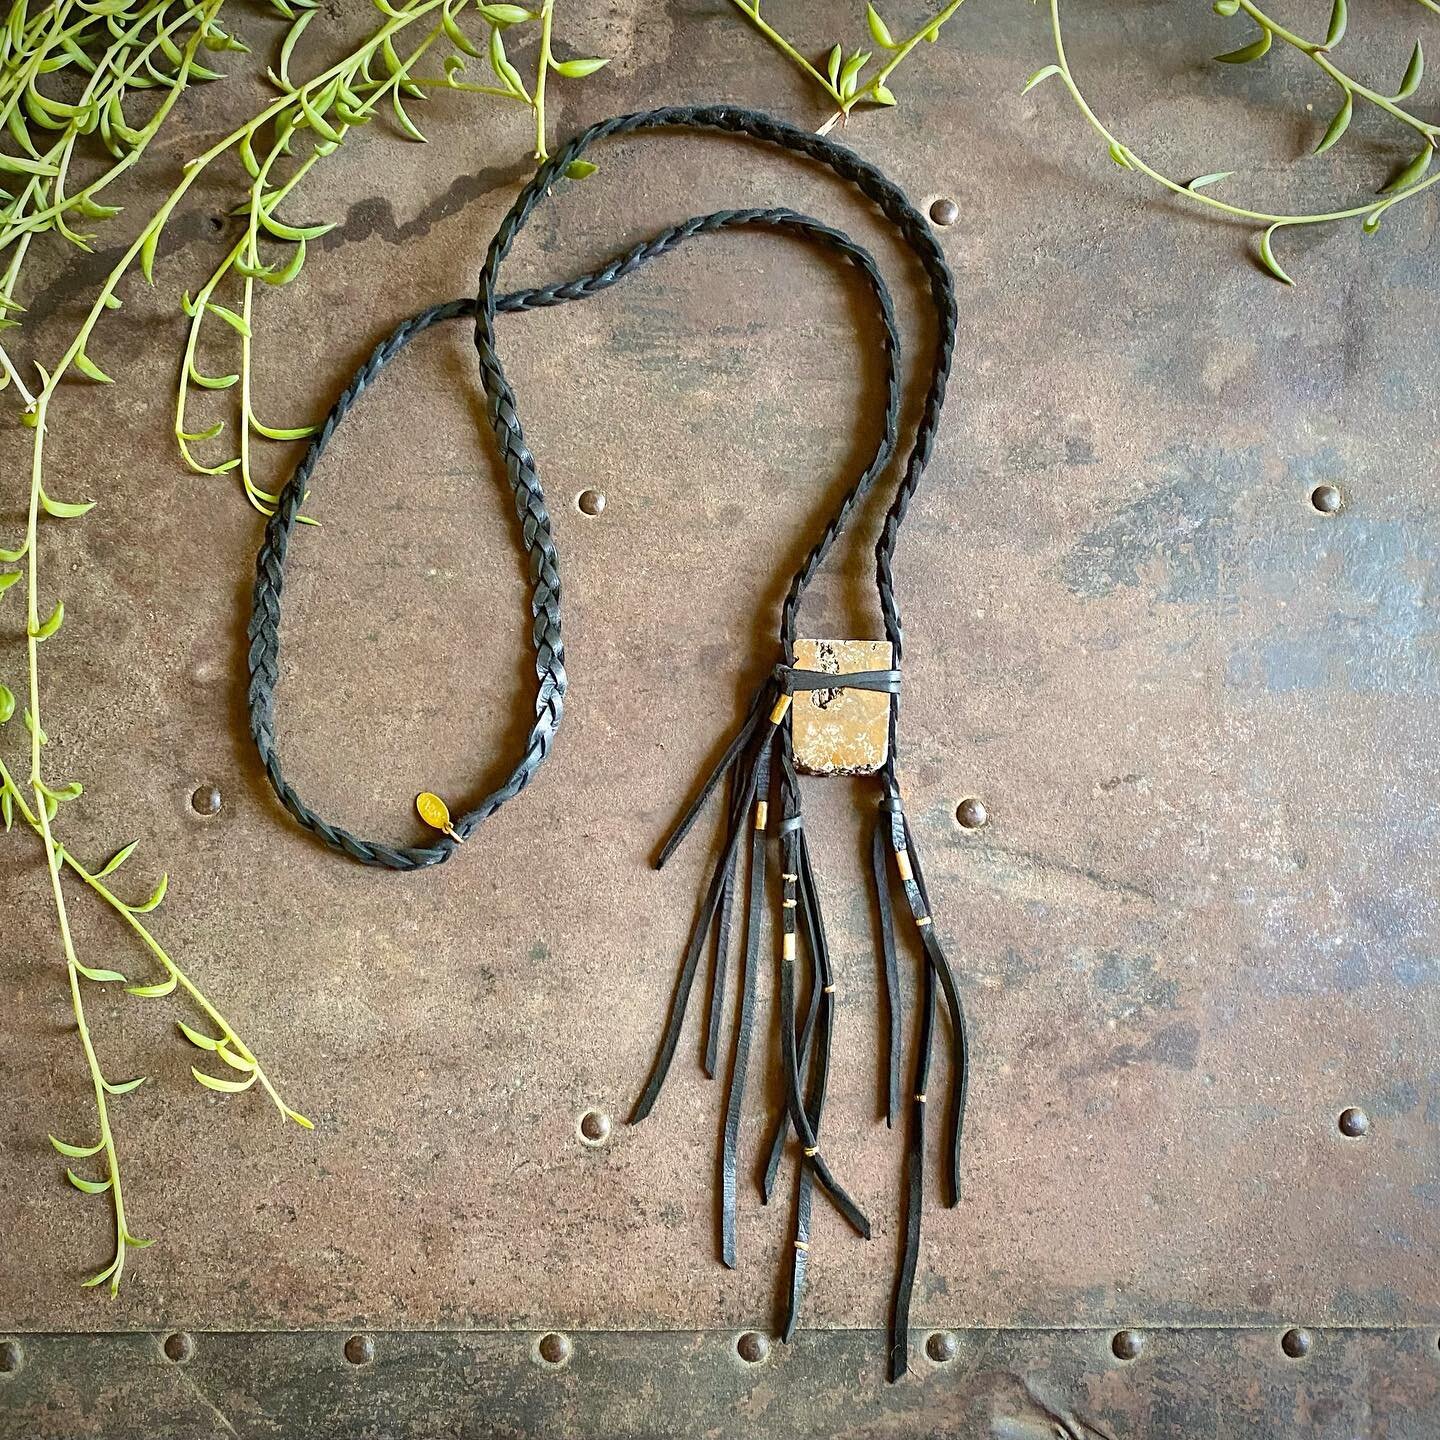 ✨Sneak peek at these dark druzy necklaces - available online next week✨